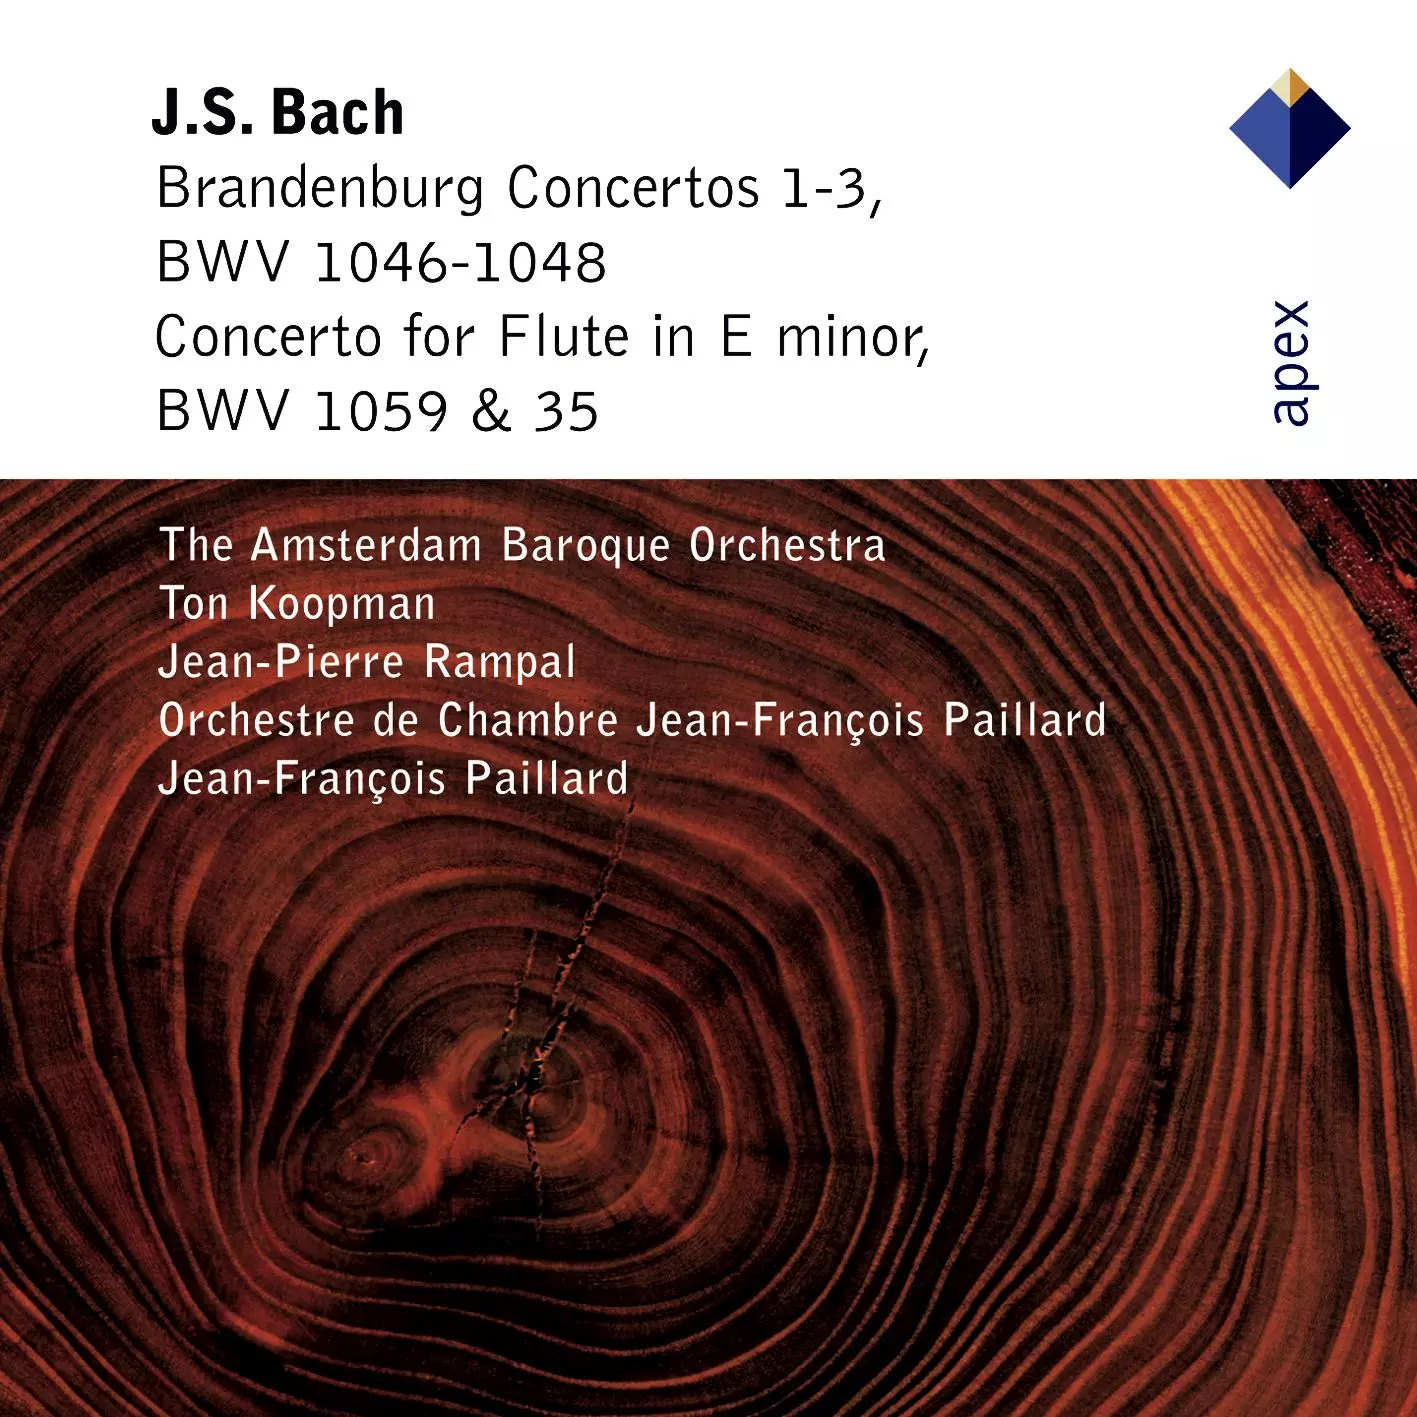 Brandenburg Concertos Nos 1 - 3 & Flute Concerto